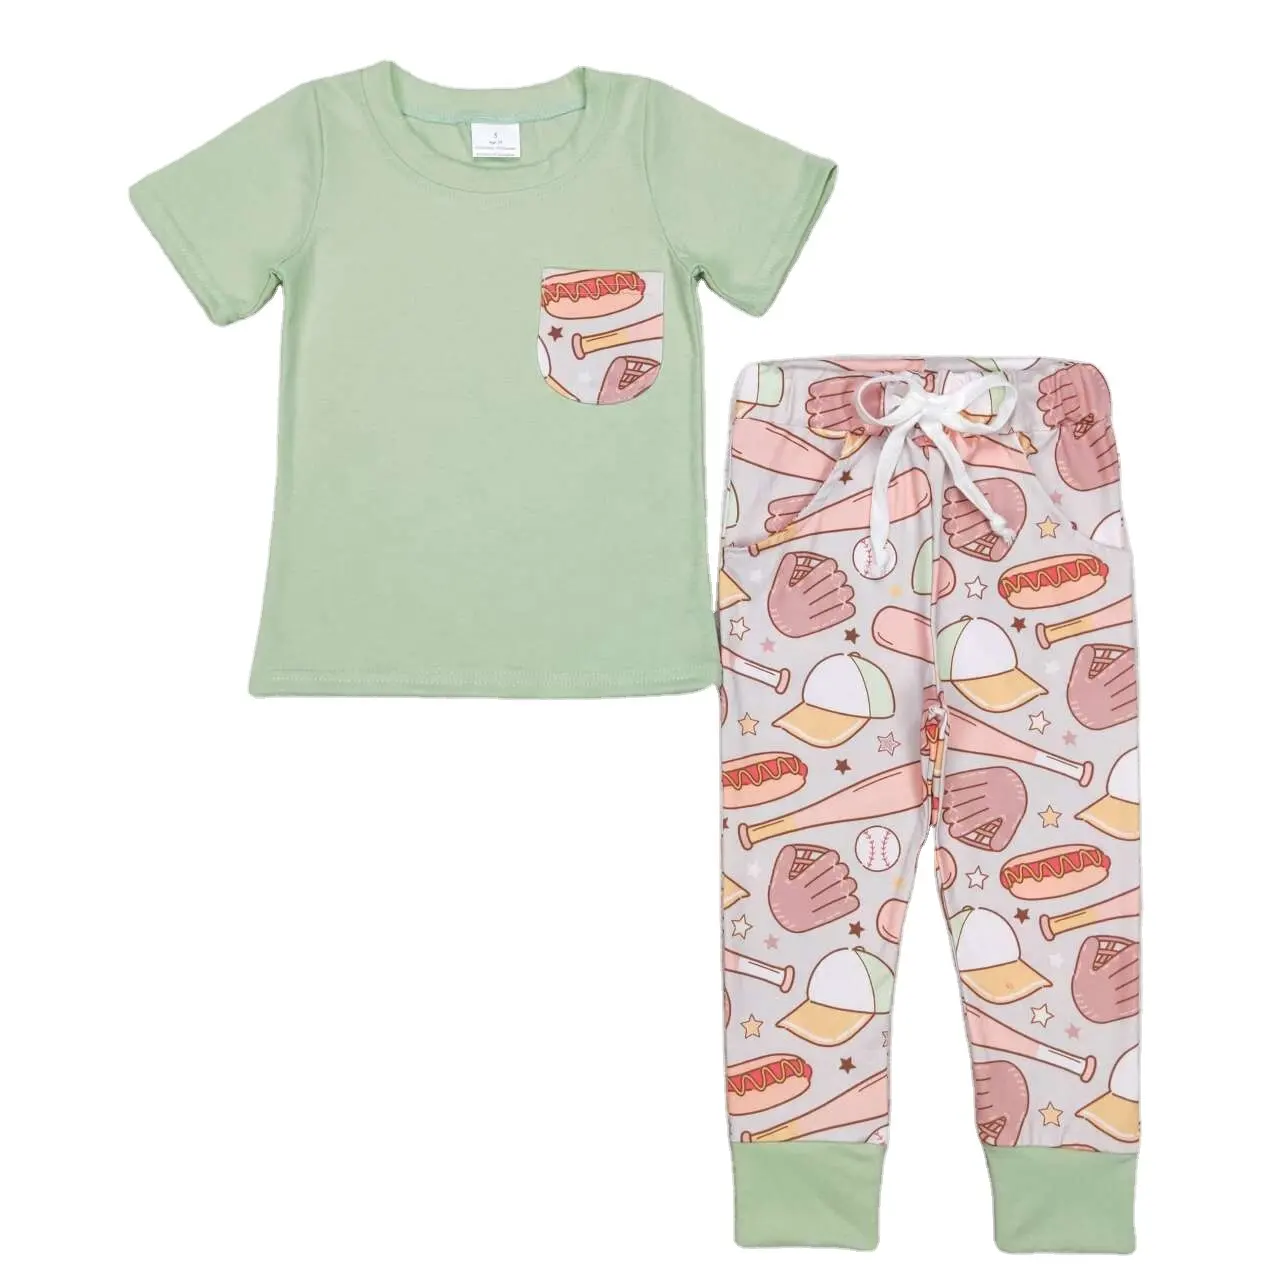 Fashion baby boy clothes Two-piece Set Dinosaur Short Sleeve Pants Set summer boutique clothes boys clothing sets